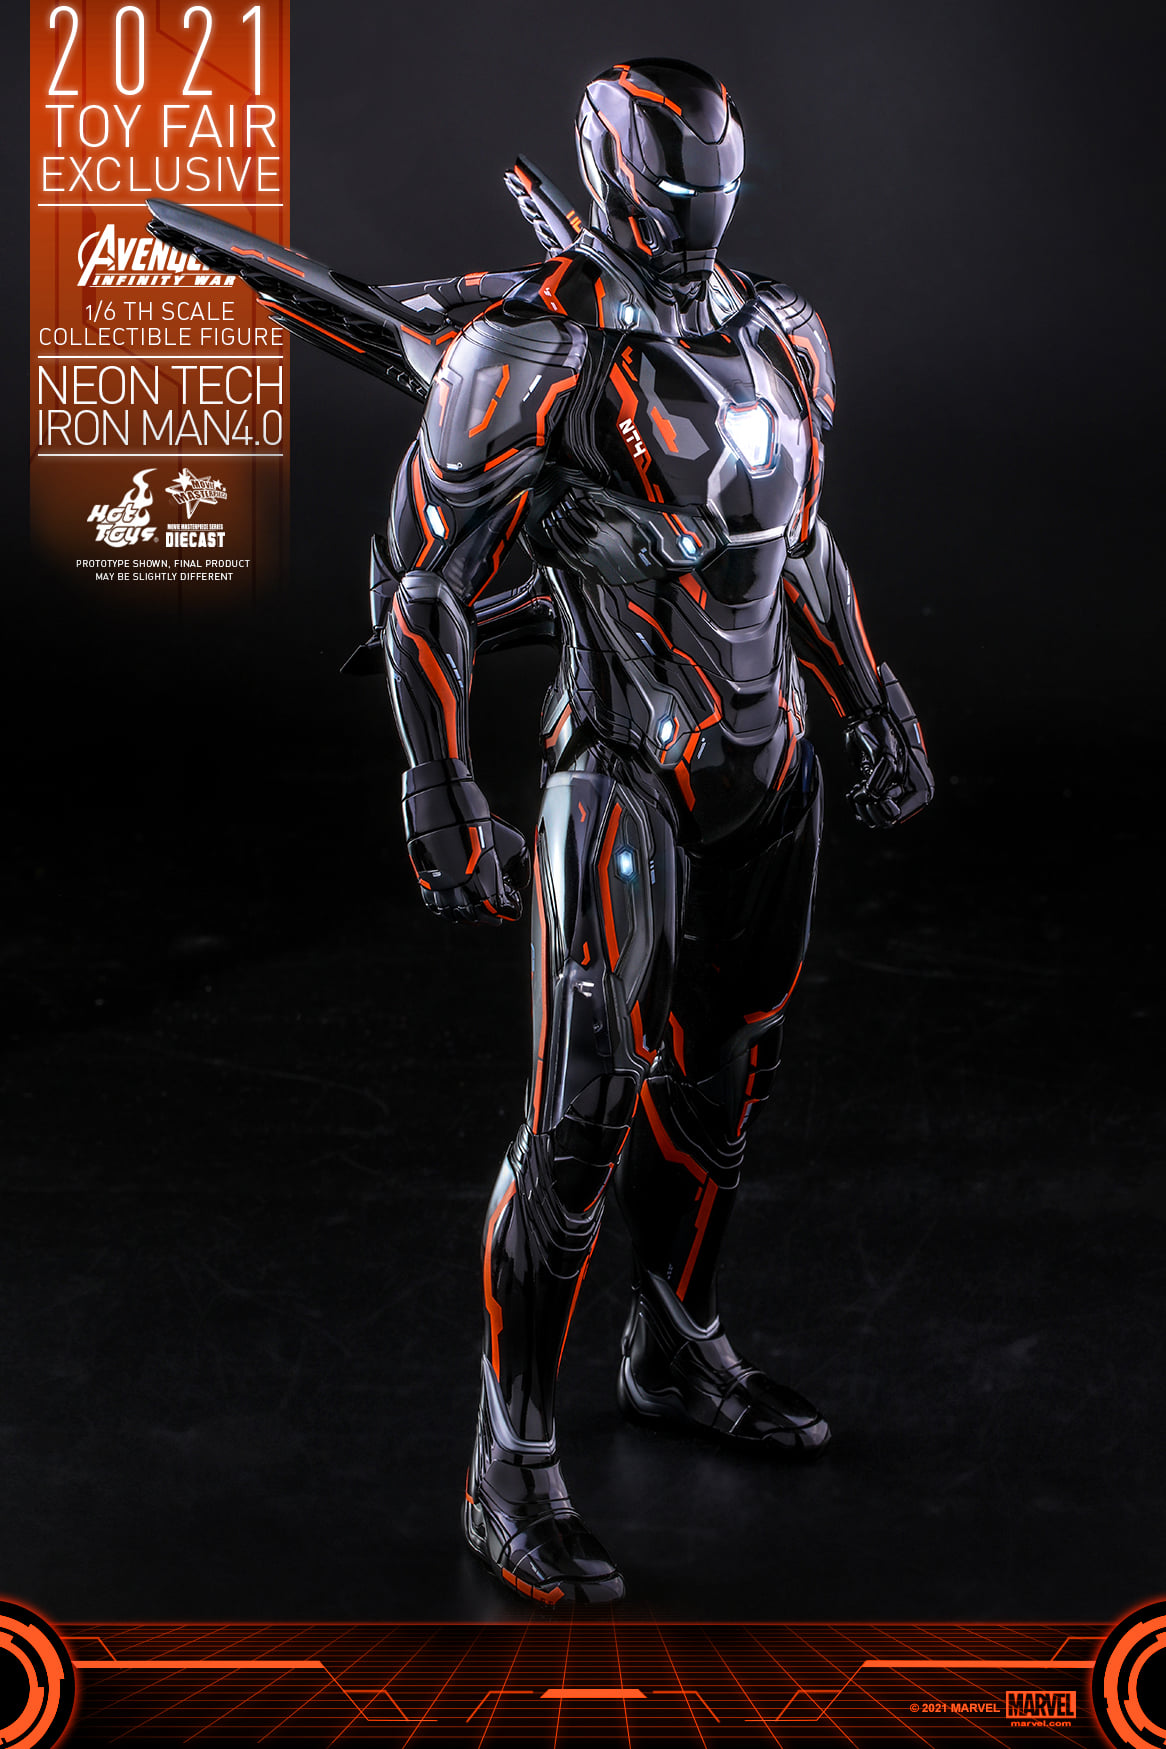 Neon Tech Iron Man 4.0 12